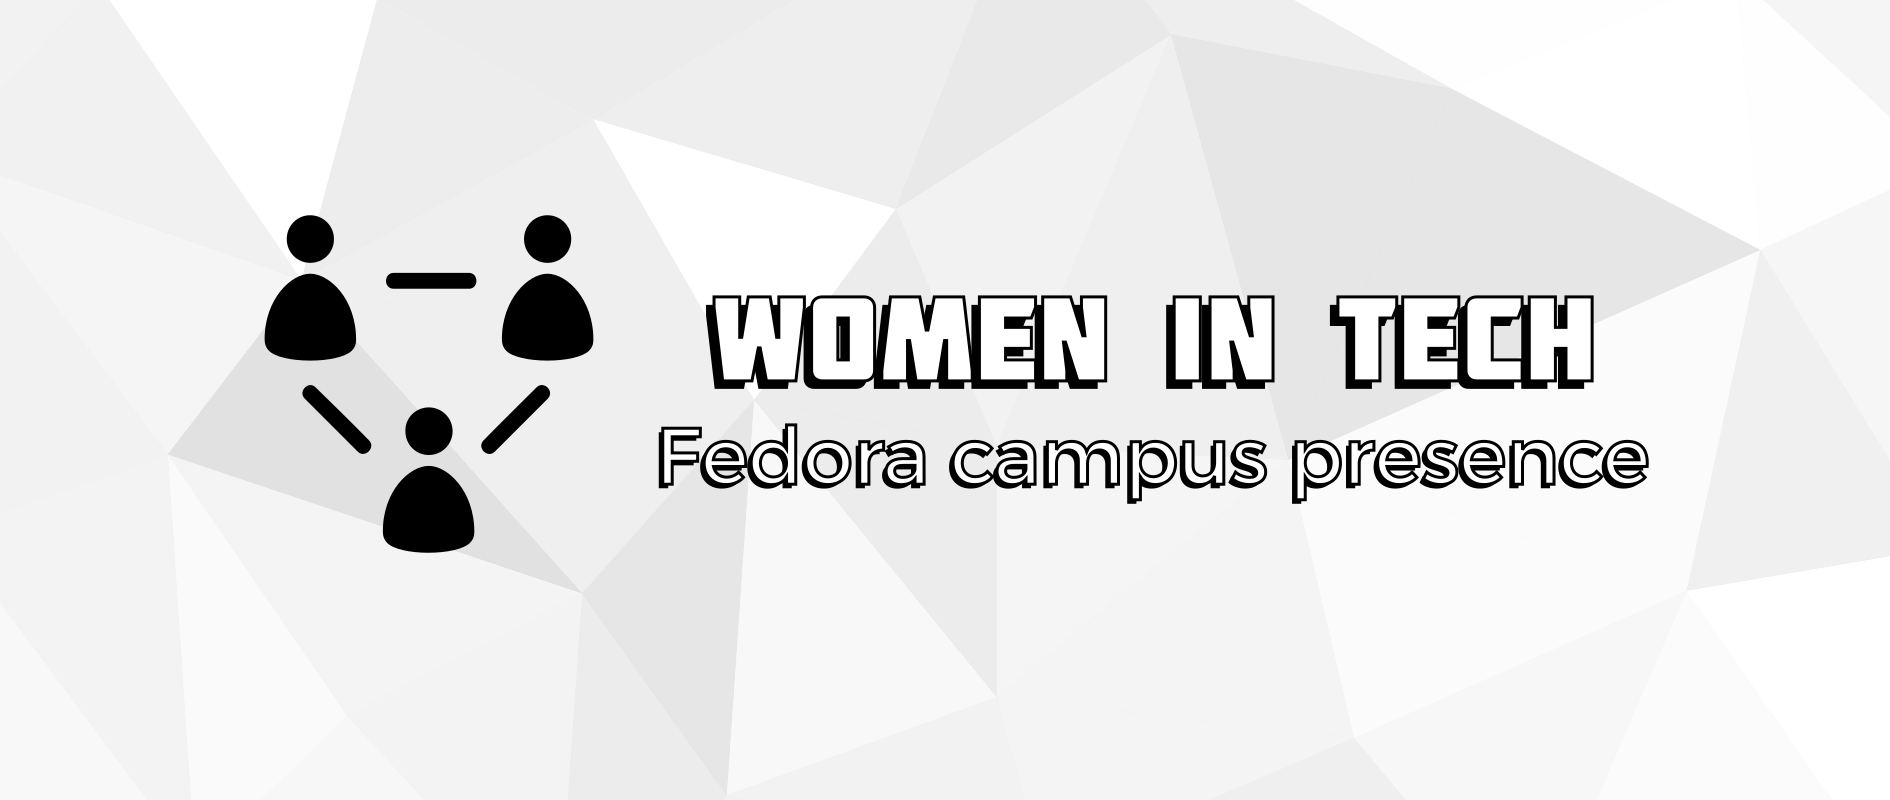 Women in technology: Fedora campus presence